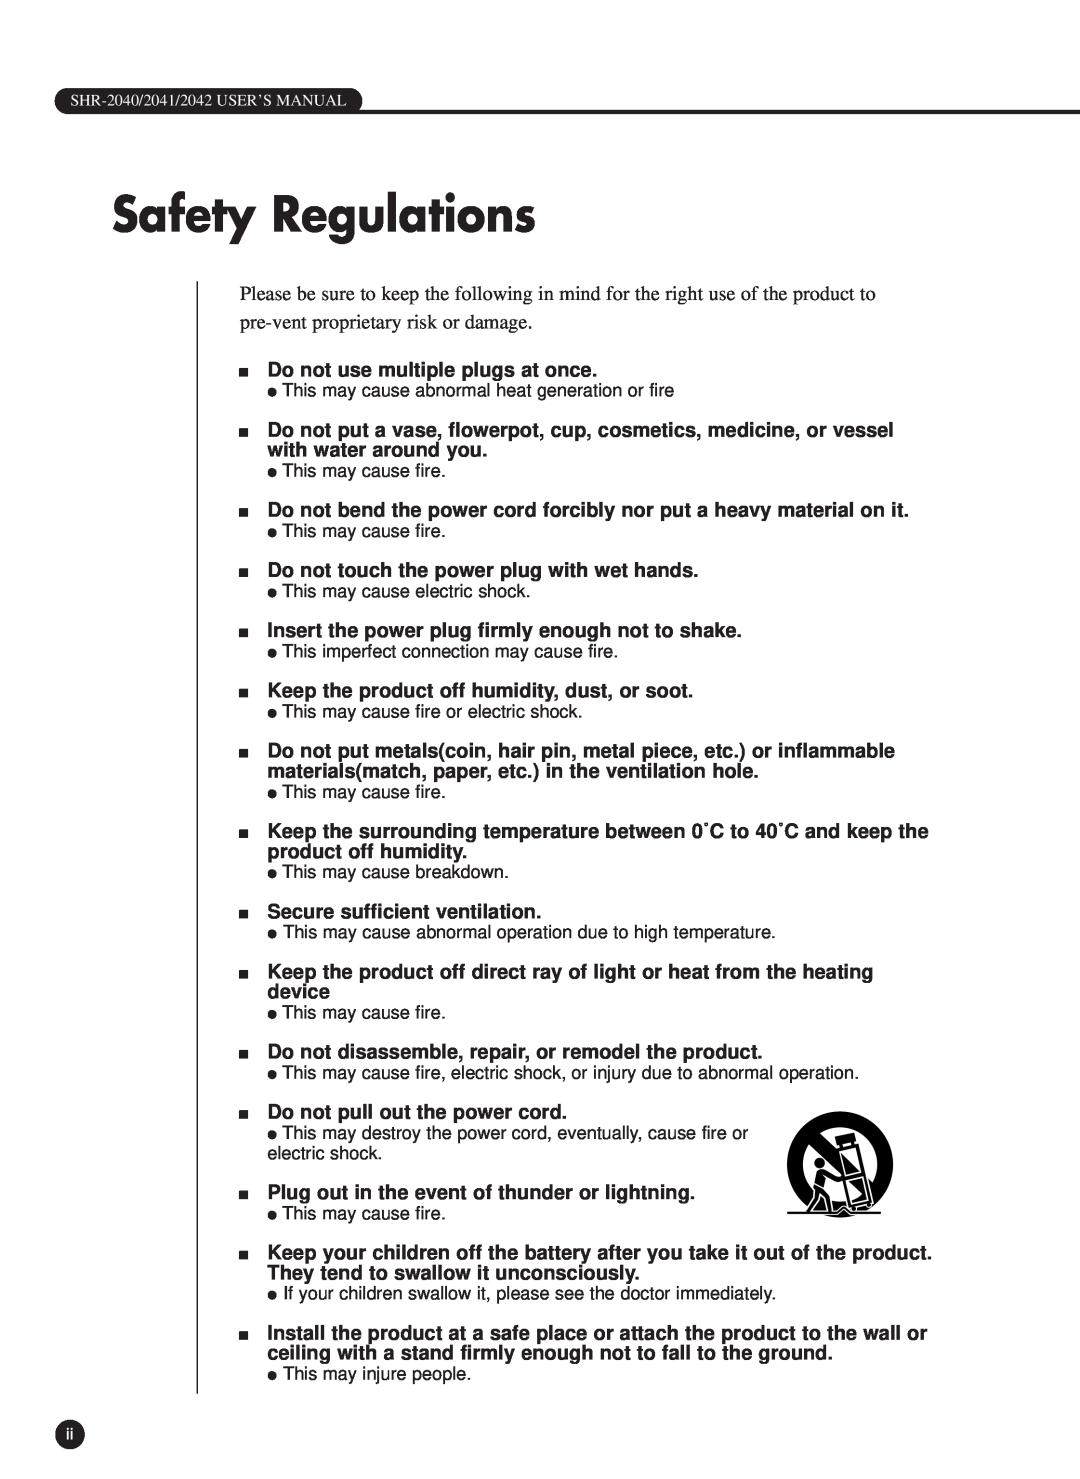 Samsung SHR-2042P, SHR-2040P/GAR, SHR-2040PX, SHR-2040P/XEC manual Safety Regulations 